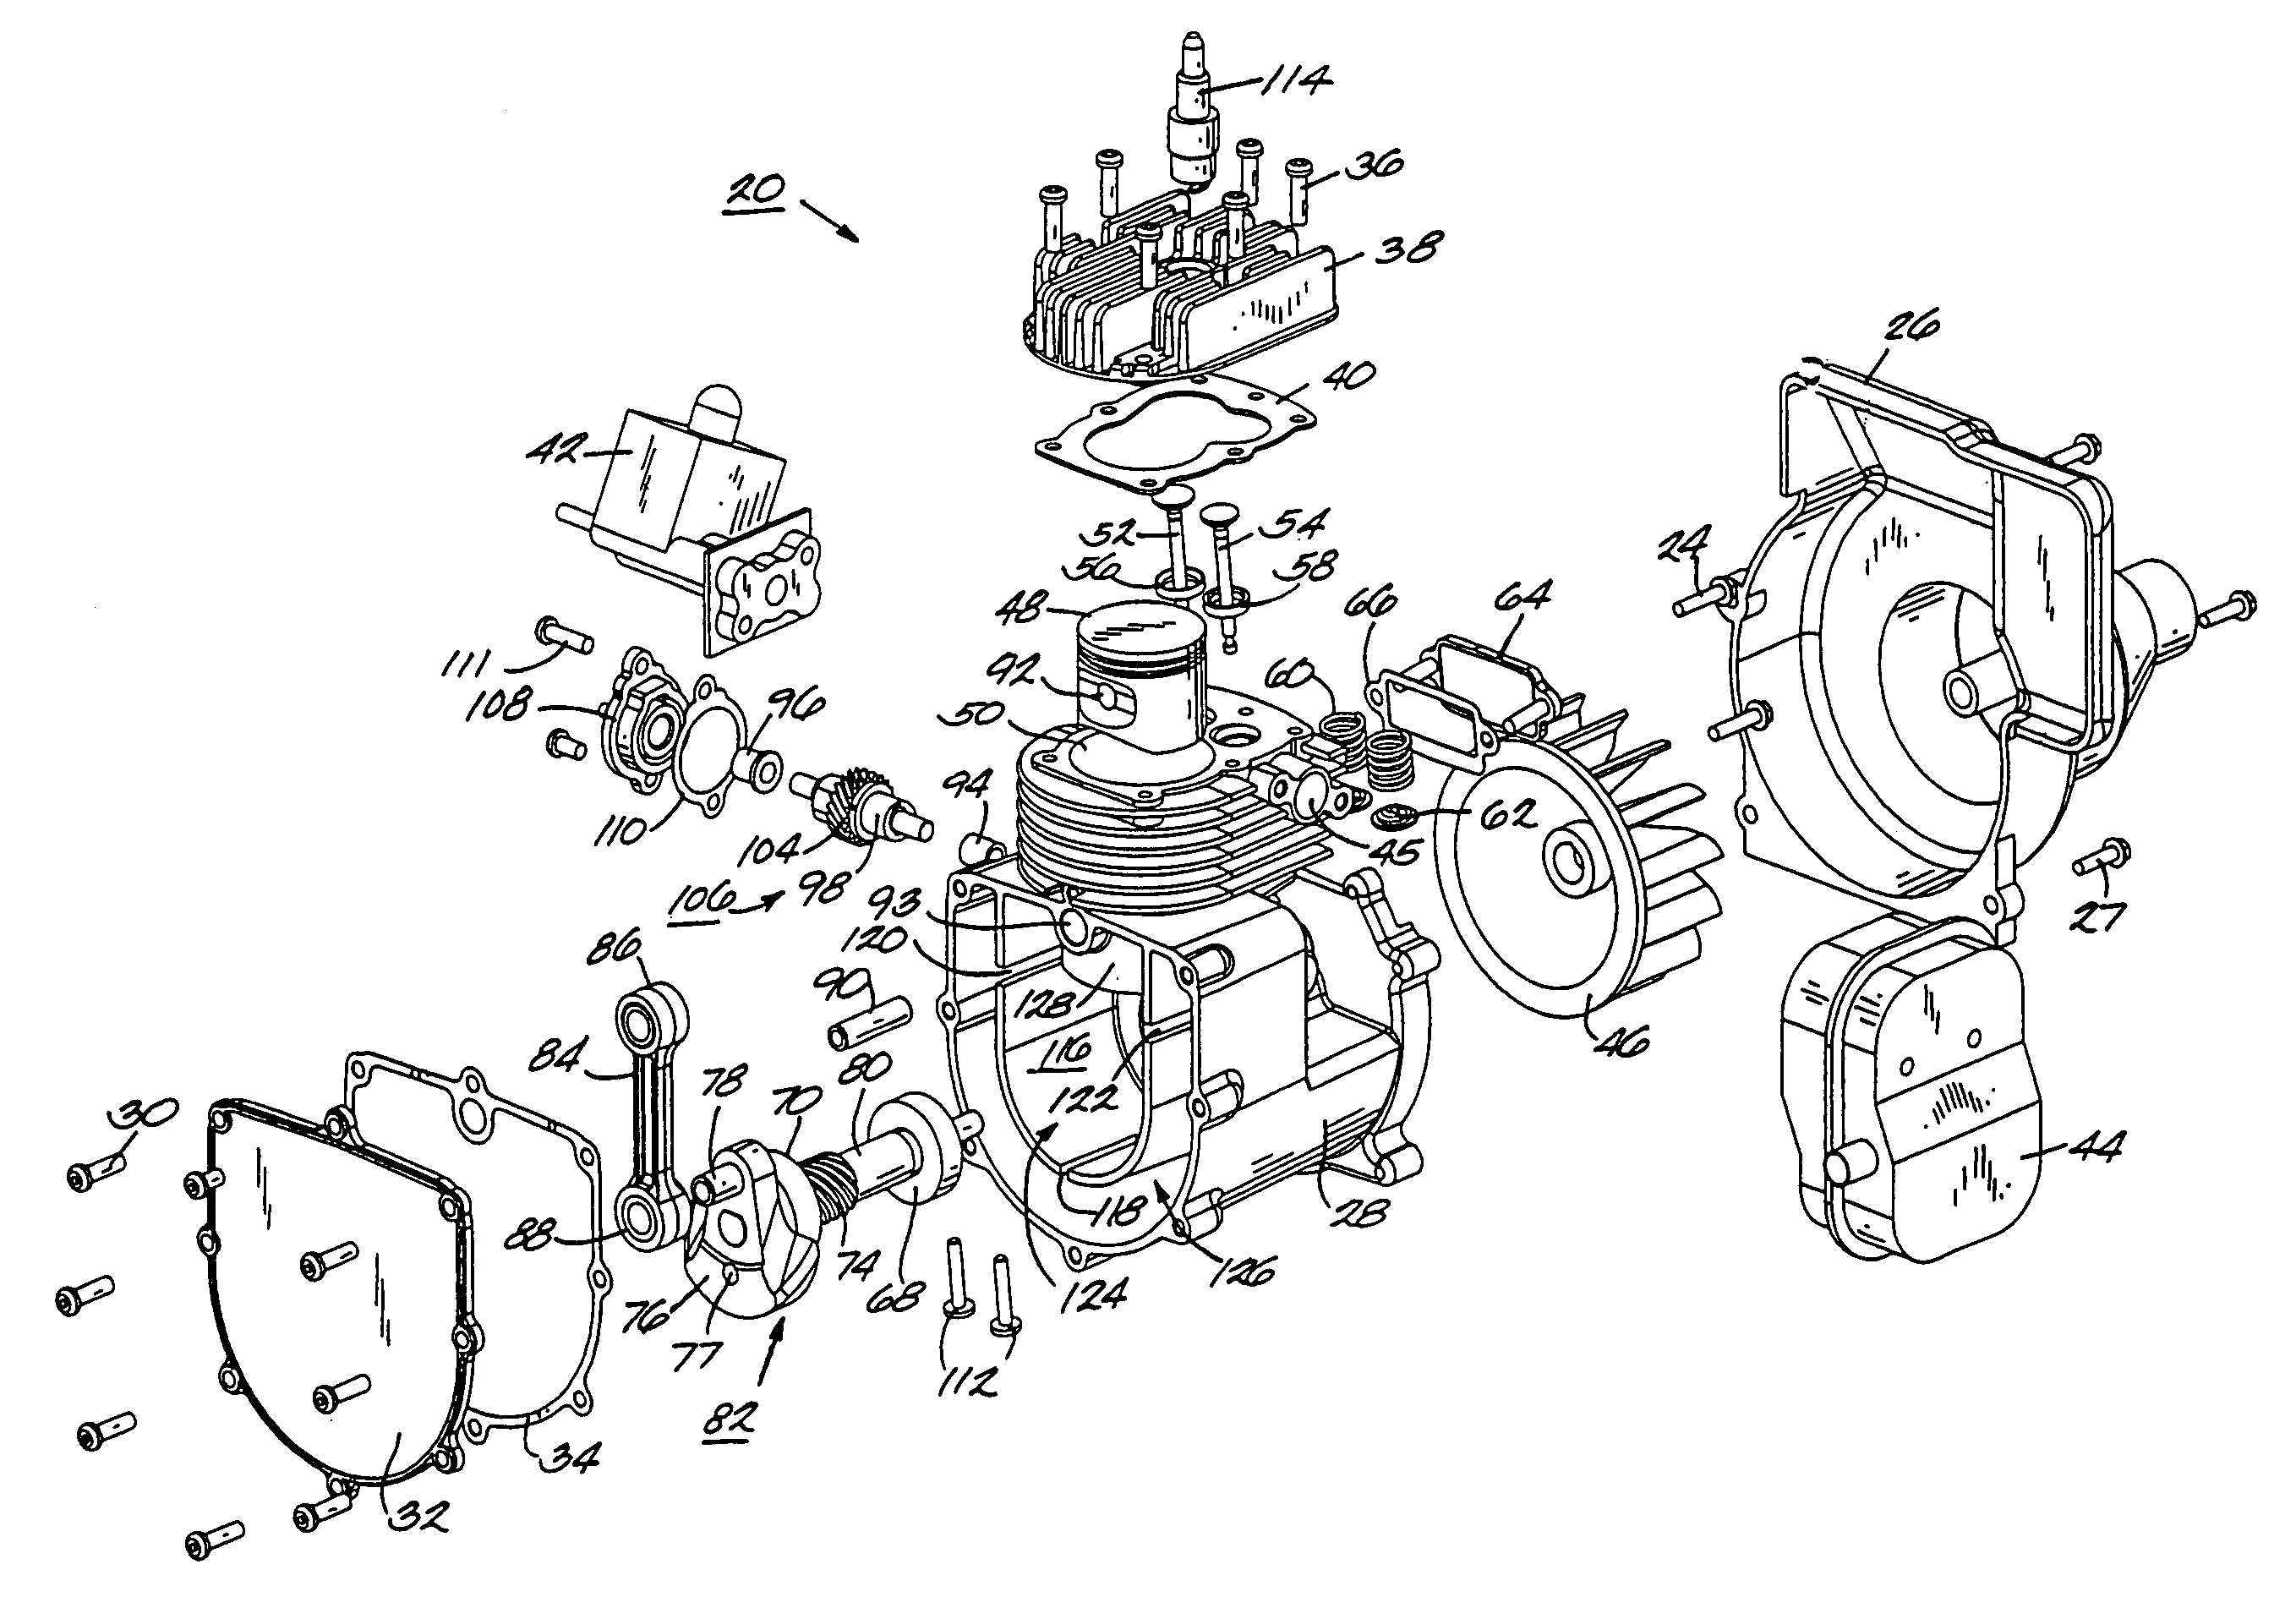 Four-stroke internal combustion engine